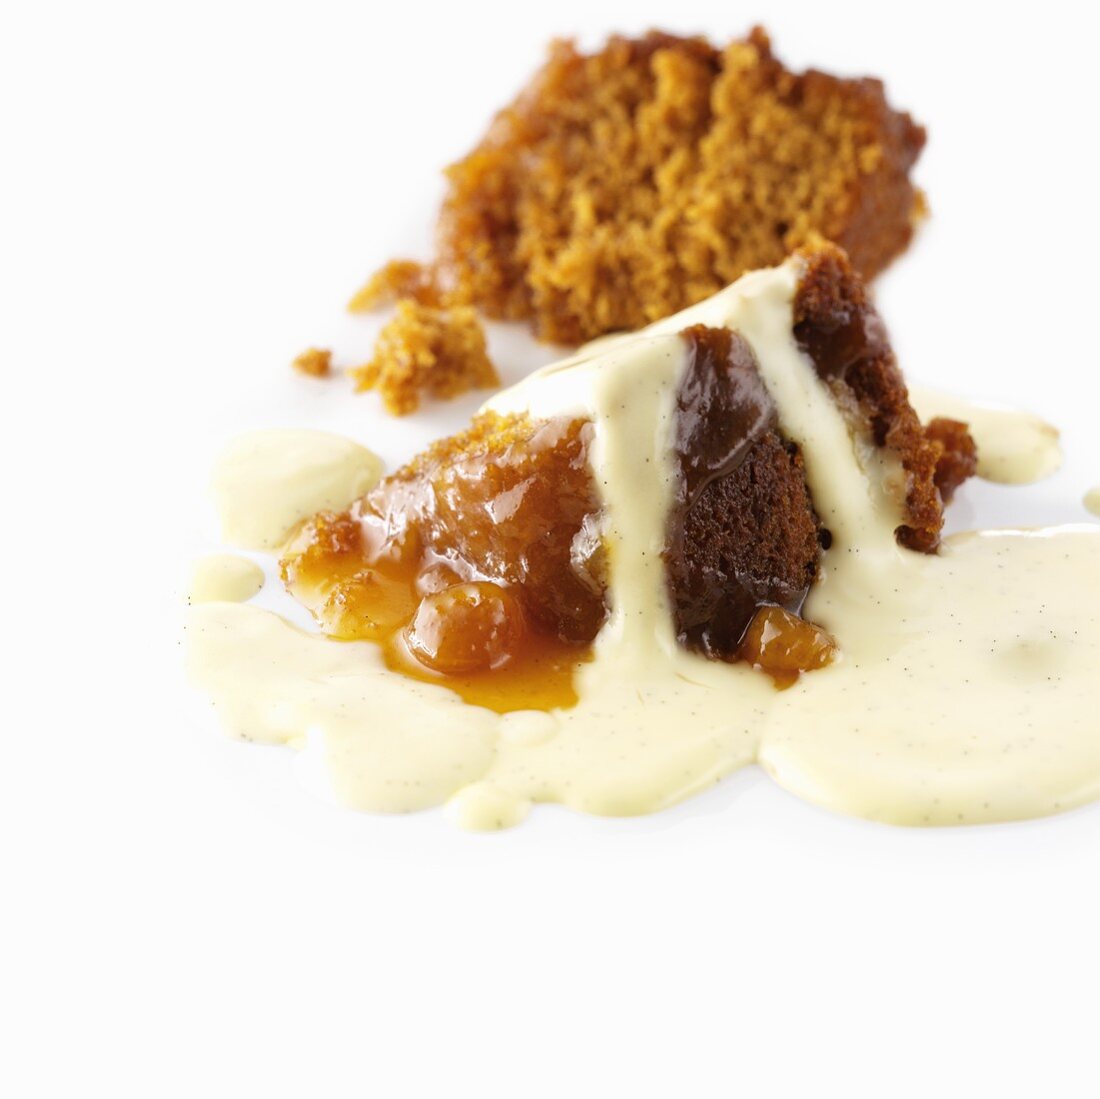 Sponge Pudding (englischer Biskuitpudding) mit Vanillesauce